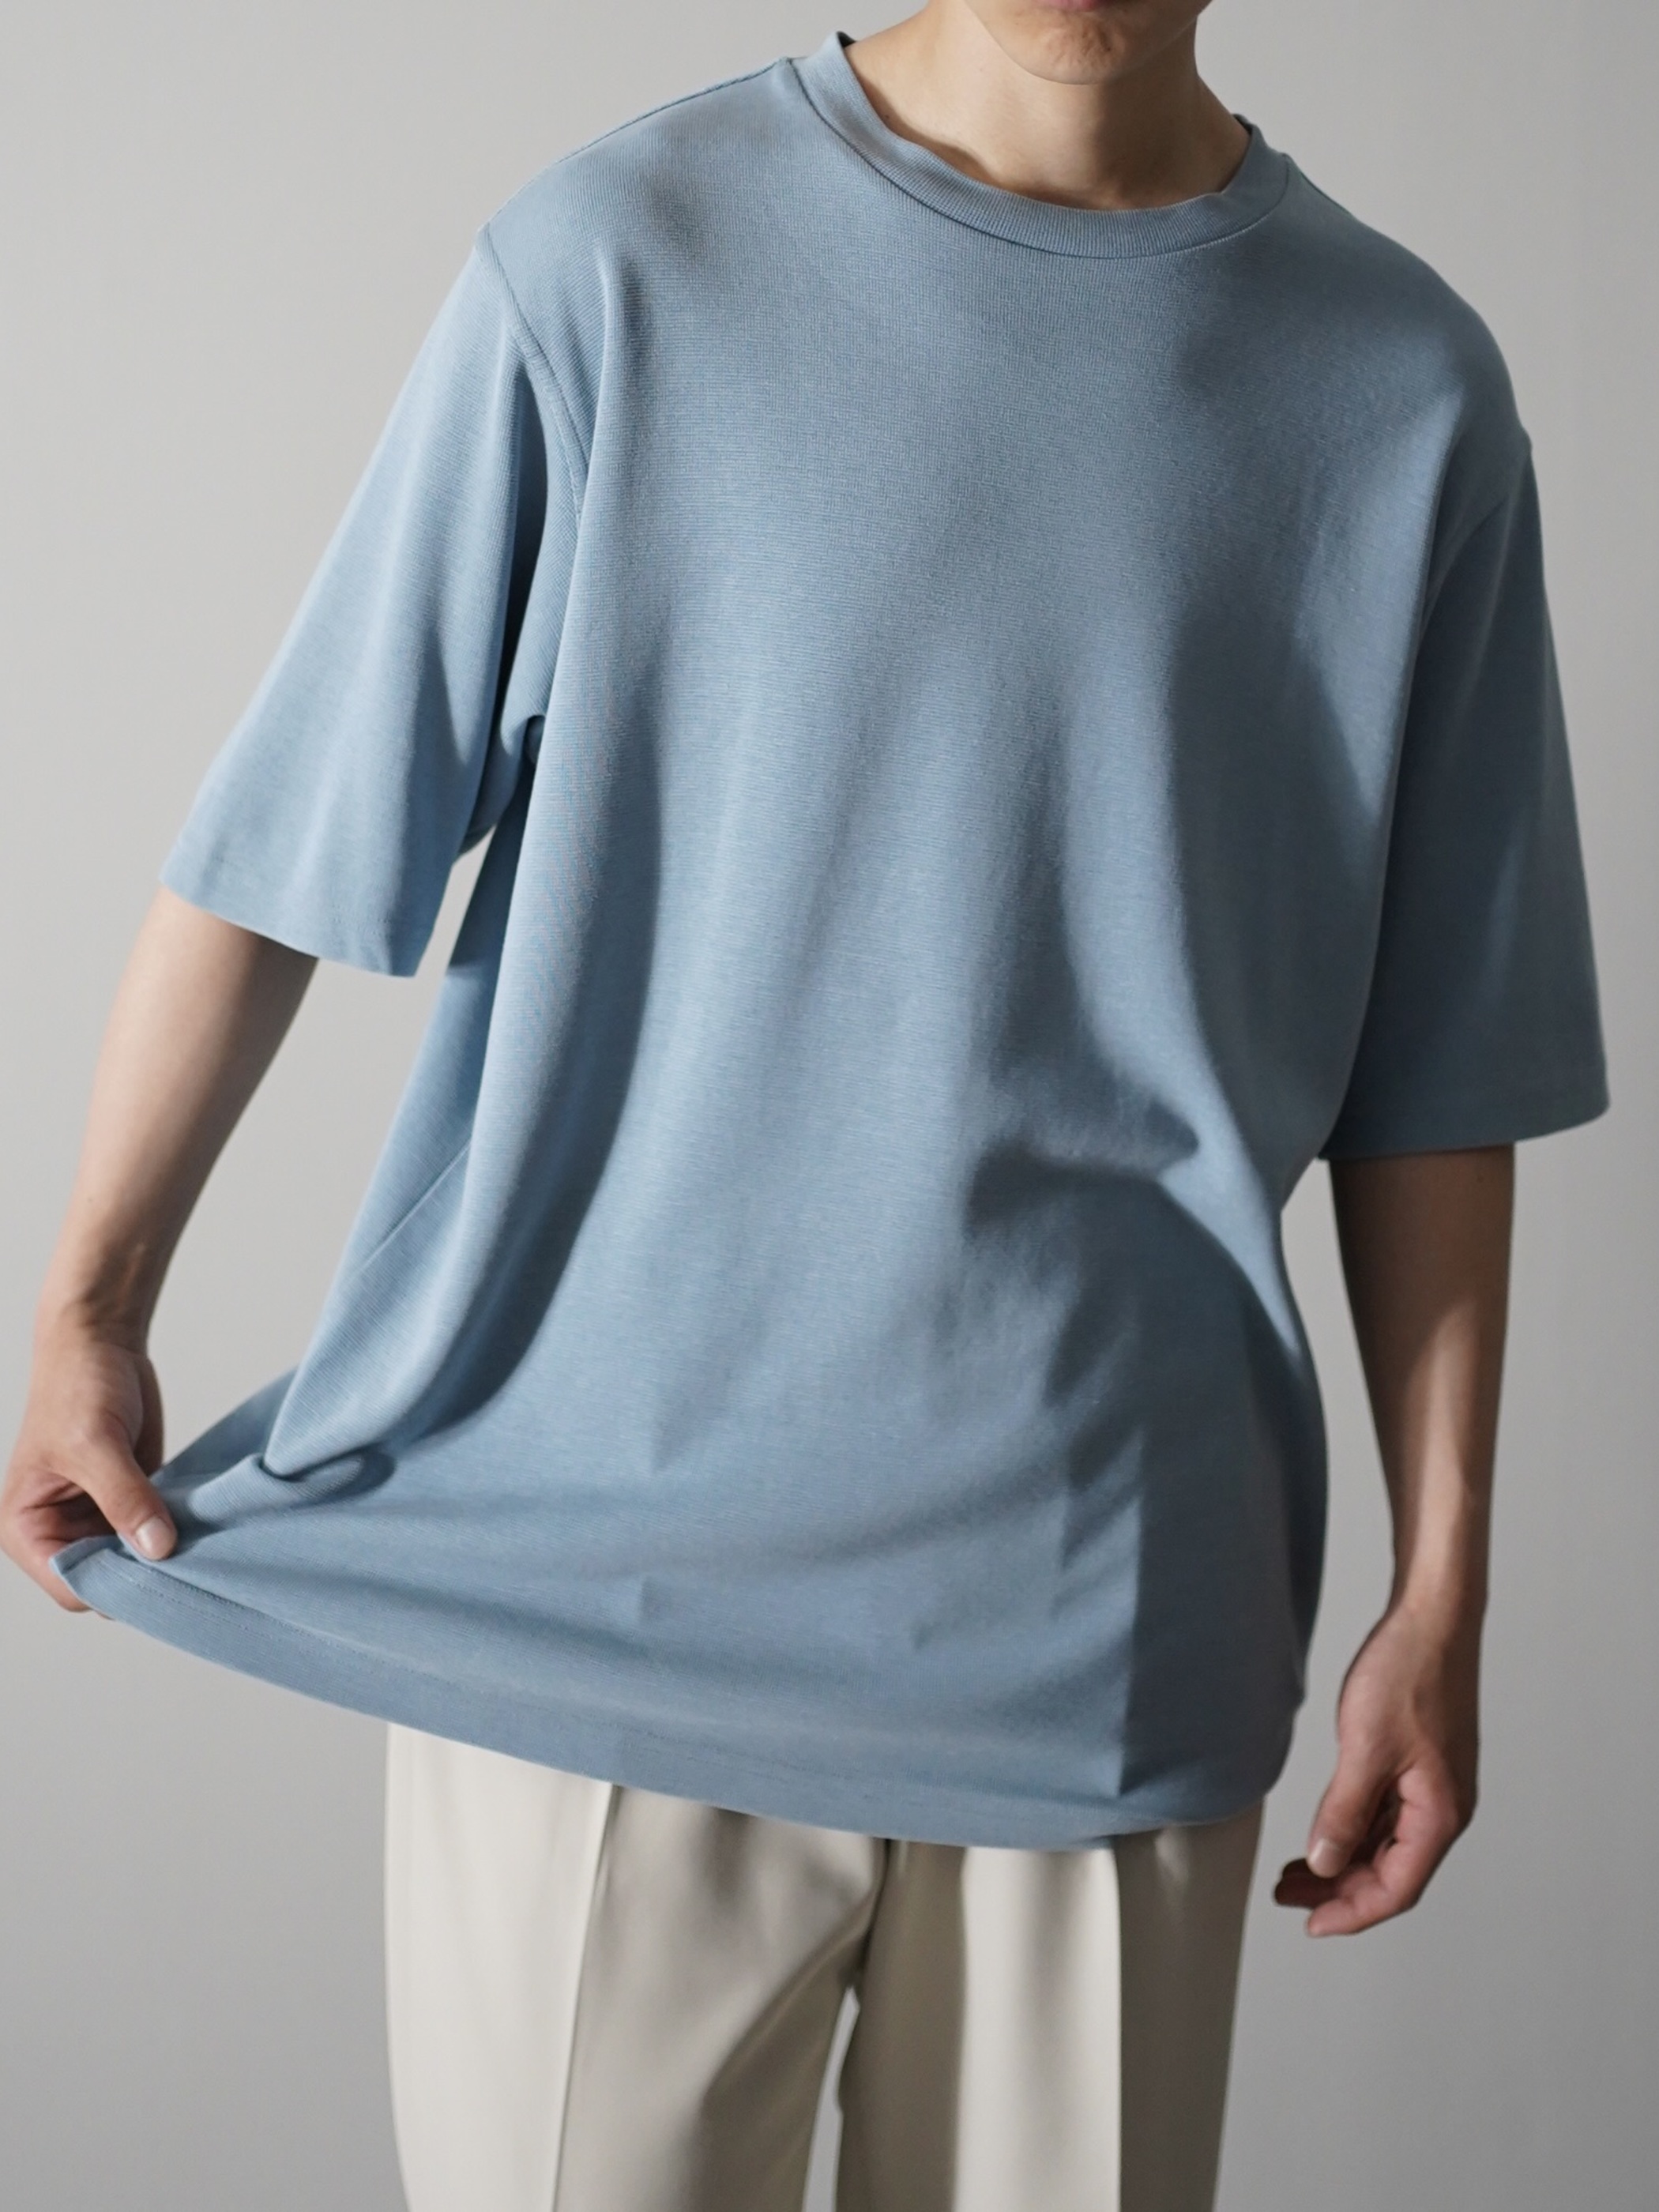 THE TERRITORY AHEAD Silk cotton T-shirt